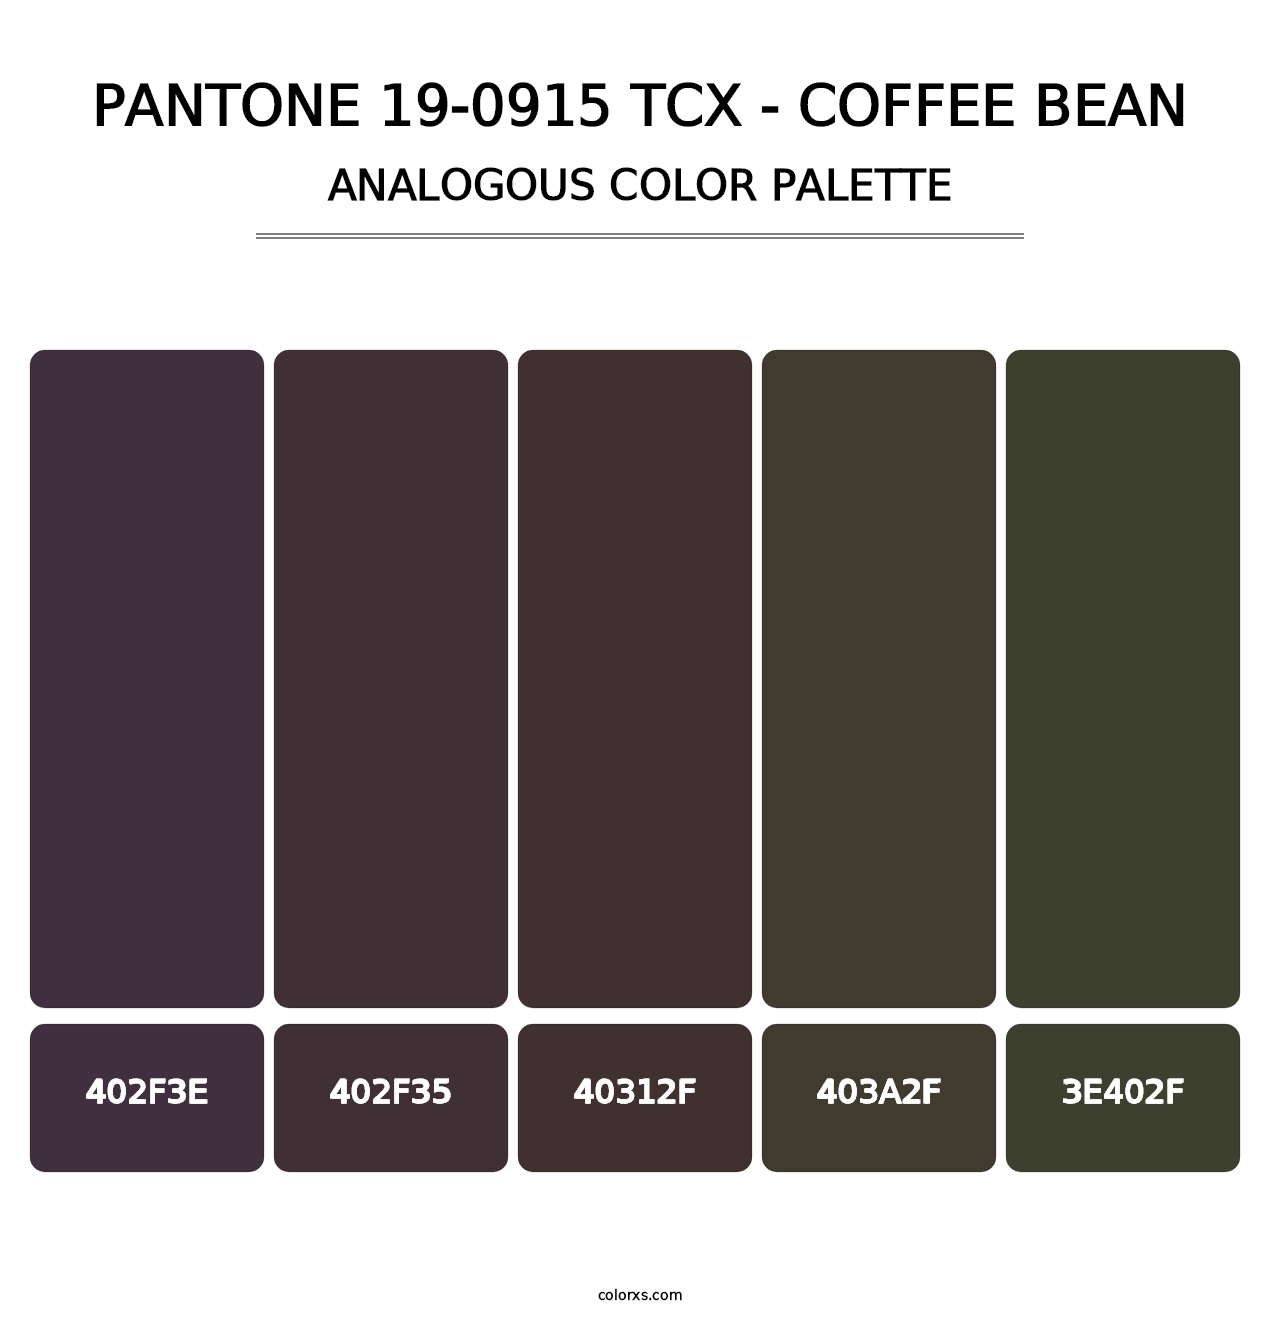 PANTONE 19-0915 TCX - Coffee Bean - Analogous Color Palette